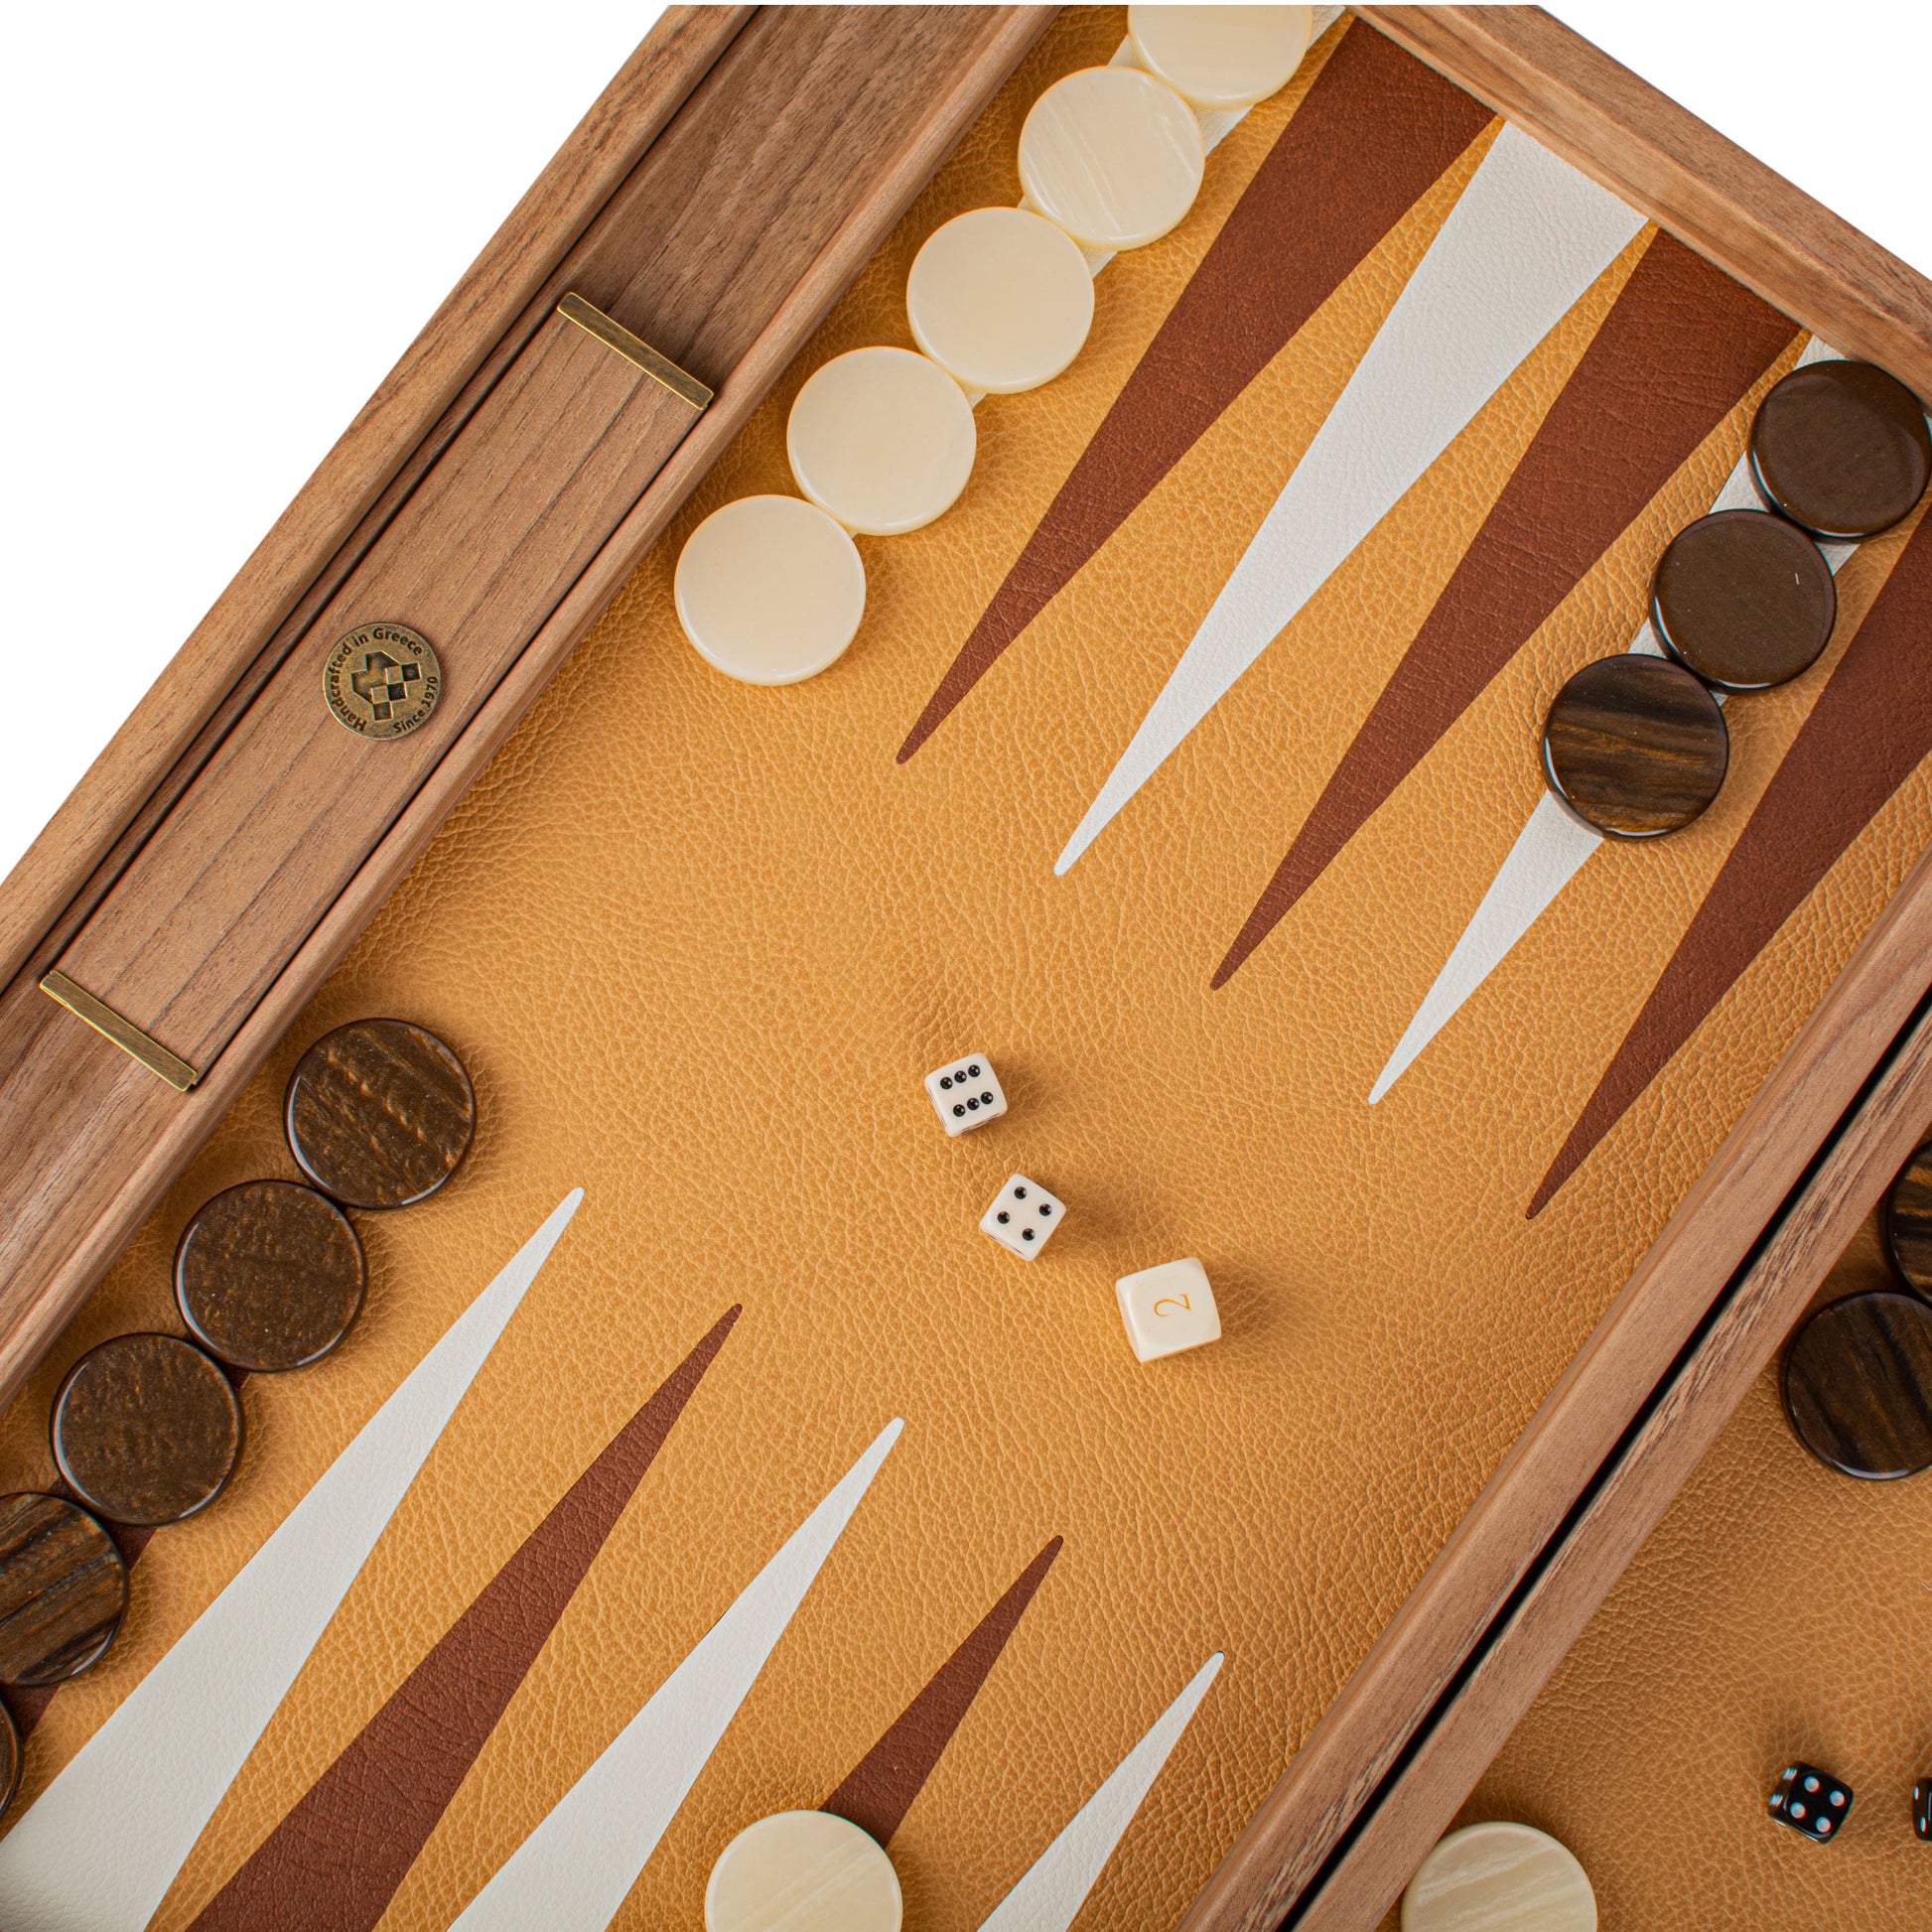 CROCODILE TOTE IN LIGHT BROWN LEATHER Backgammon - Premium Backgammon from MANOPOULOS Chess & Backgammon - Just €490! Shop now at MANOPOULOS Chess & Backgammon